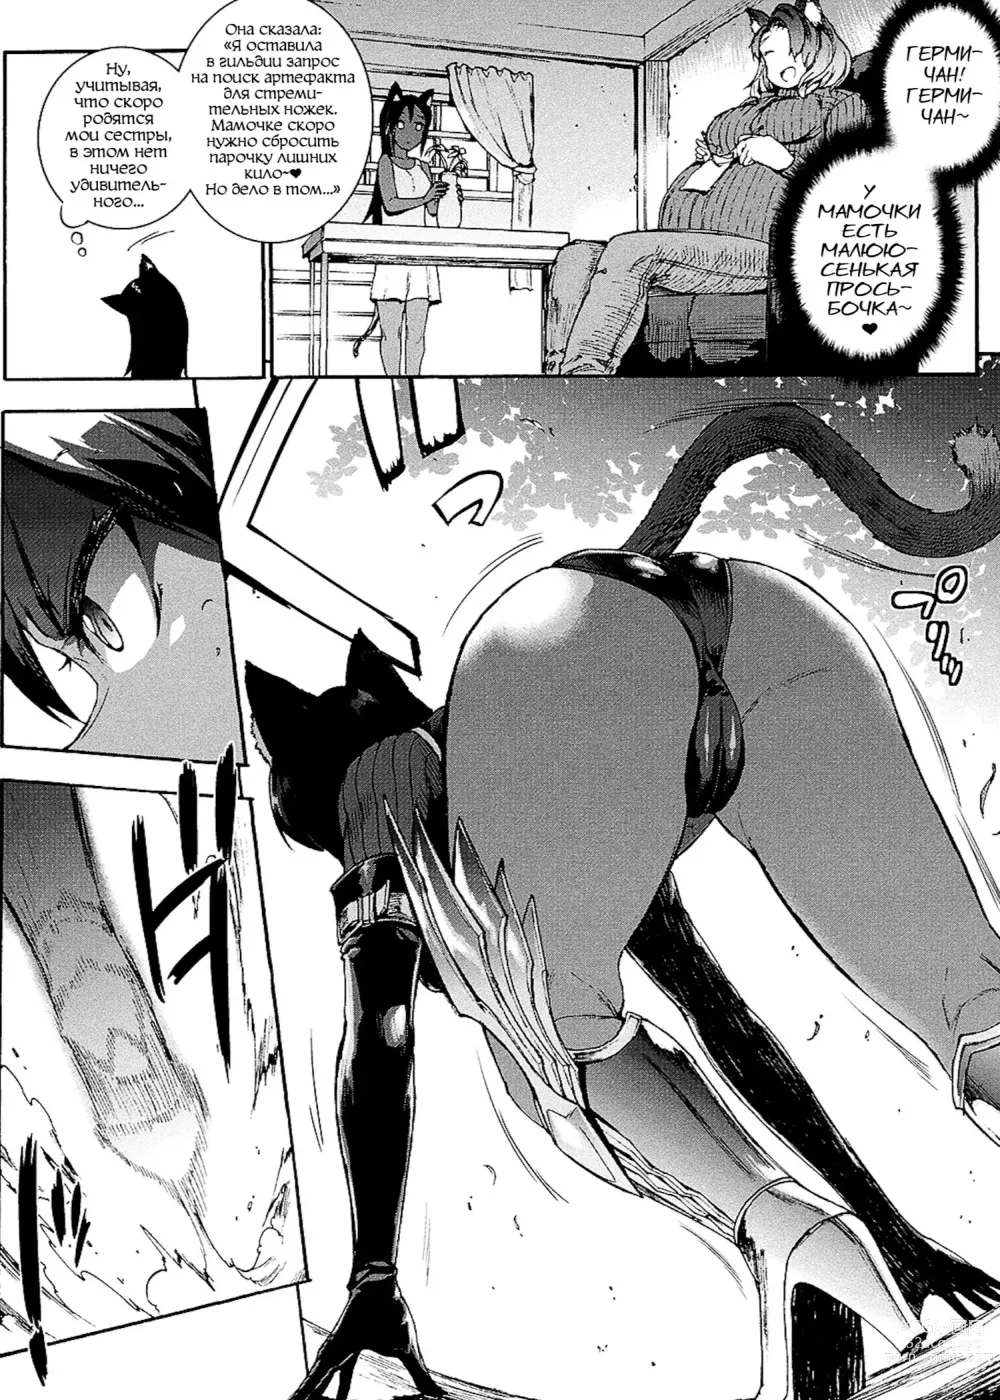 Page 9 of manga Raikou Shinki Igis Magia II -PANDRA saga 3rd ignition-